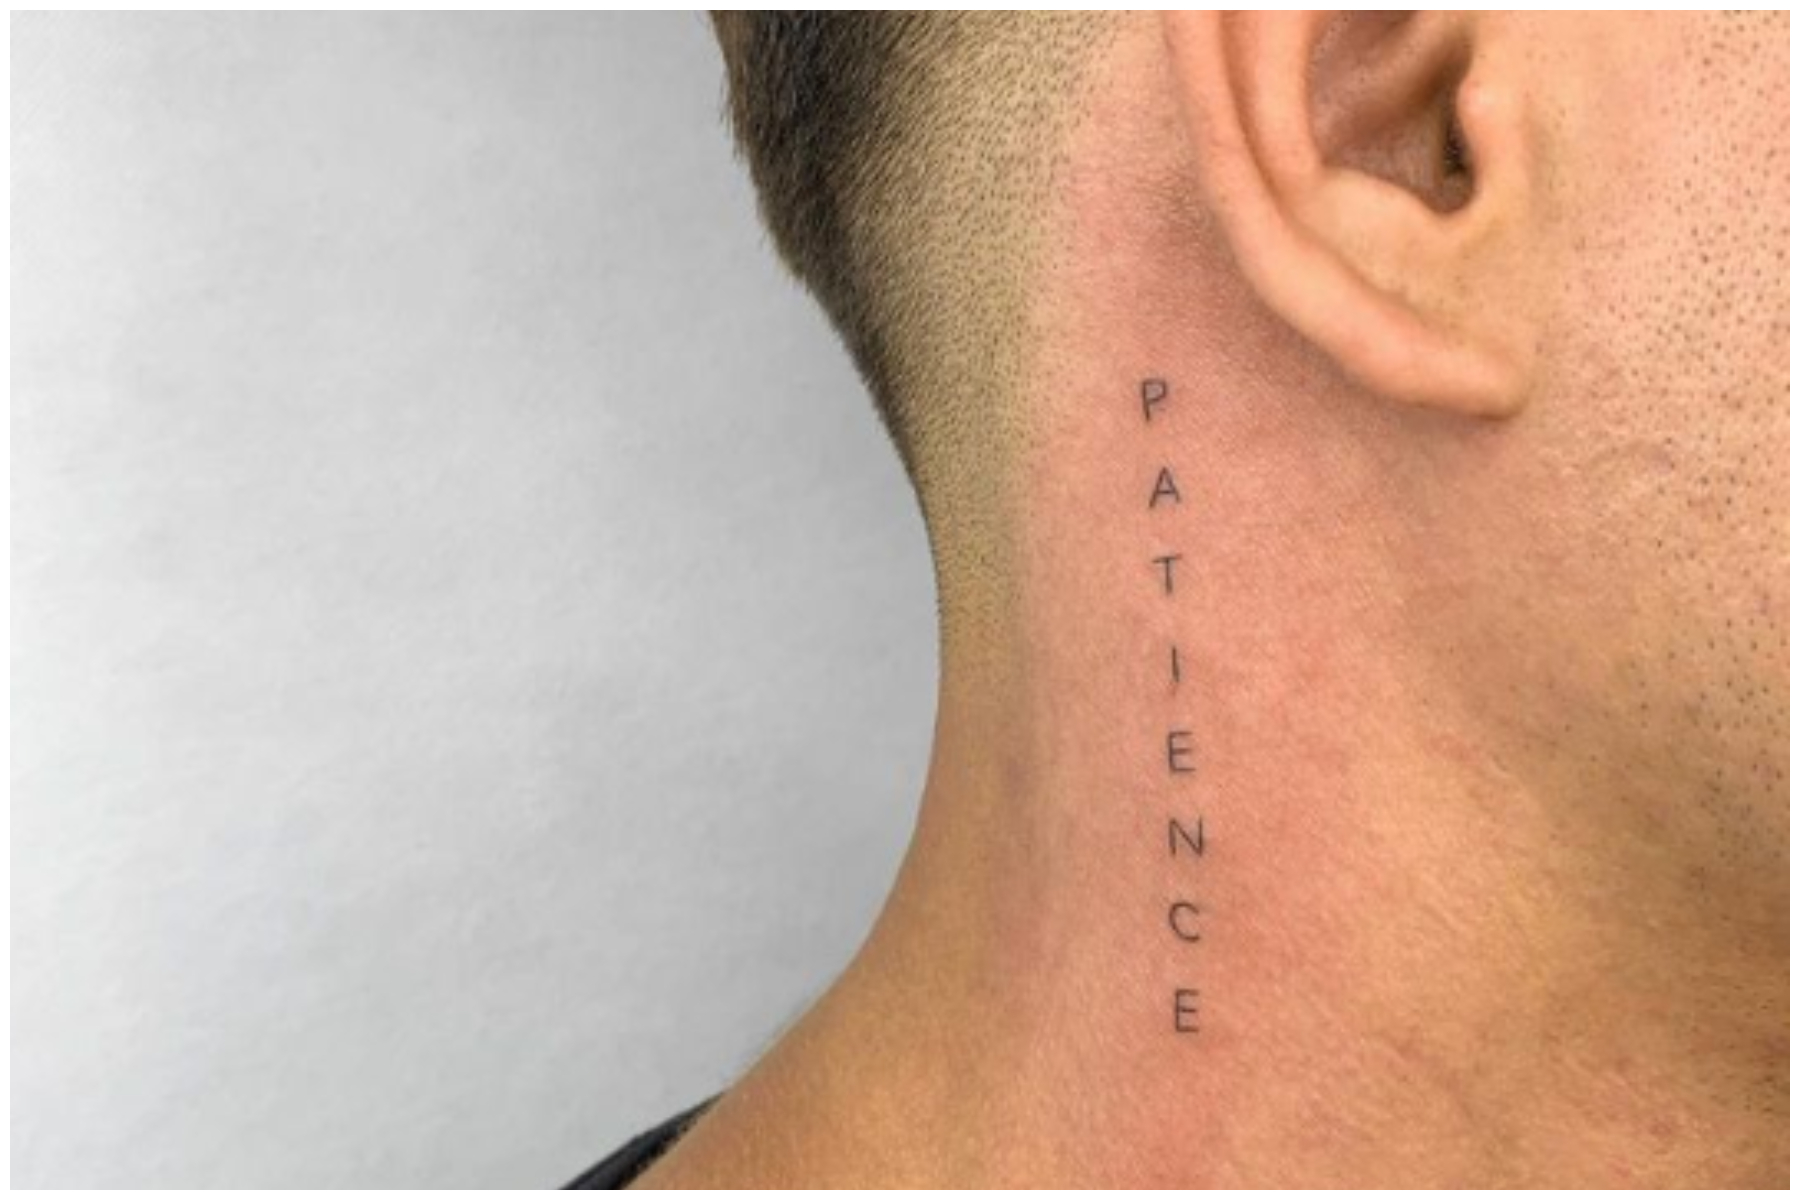 10 Best Neck Tattoos: The Best Ideas For Neck Tattoos – MrInkwells